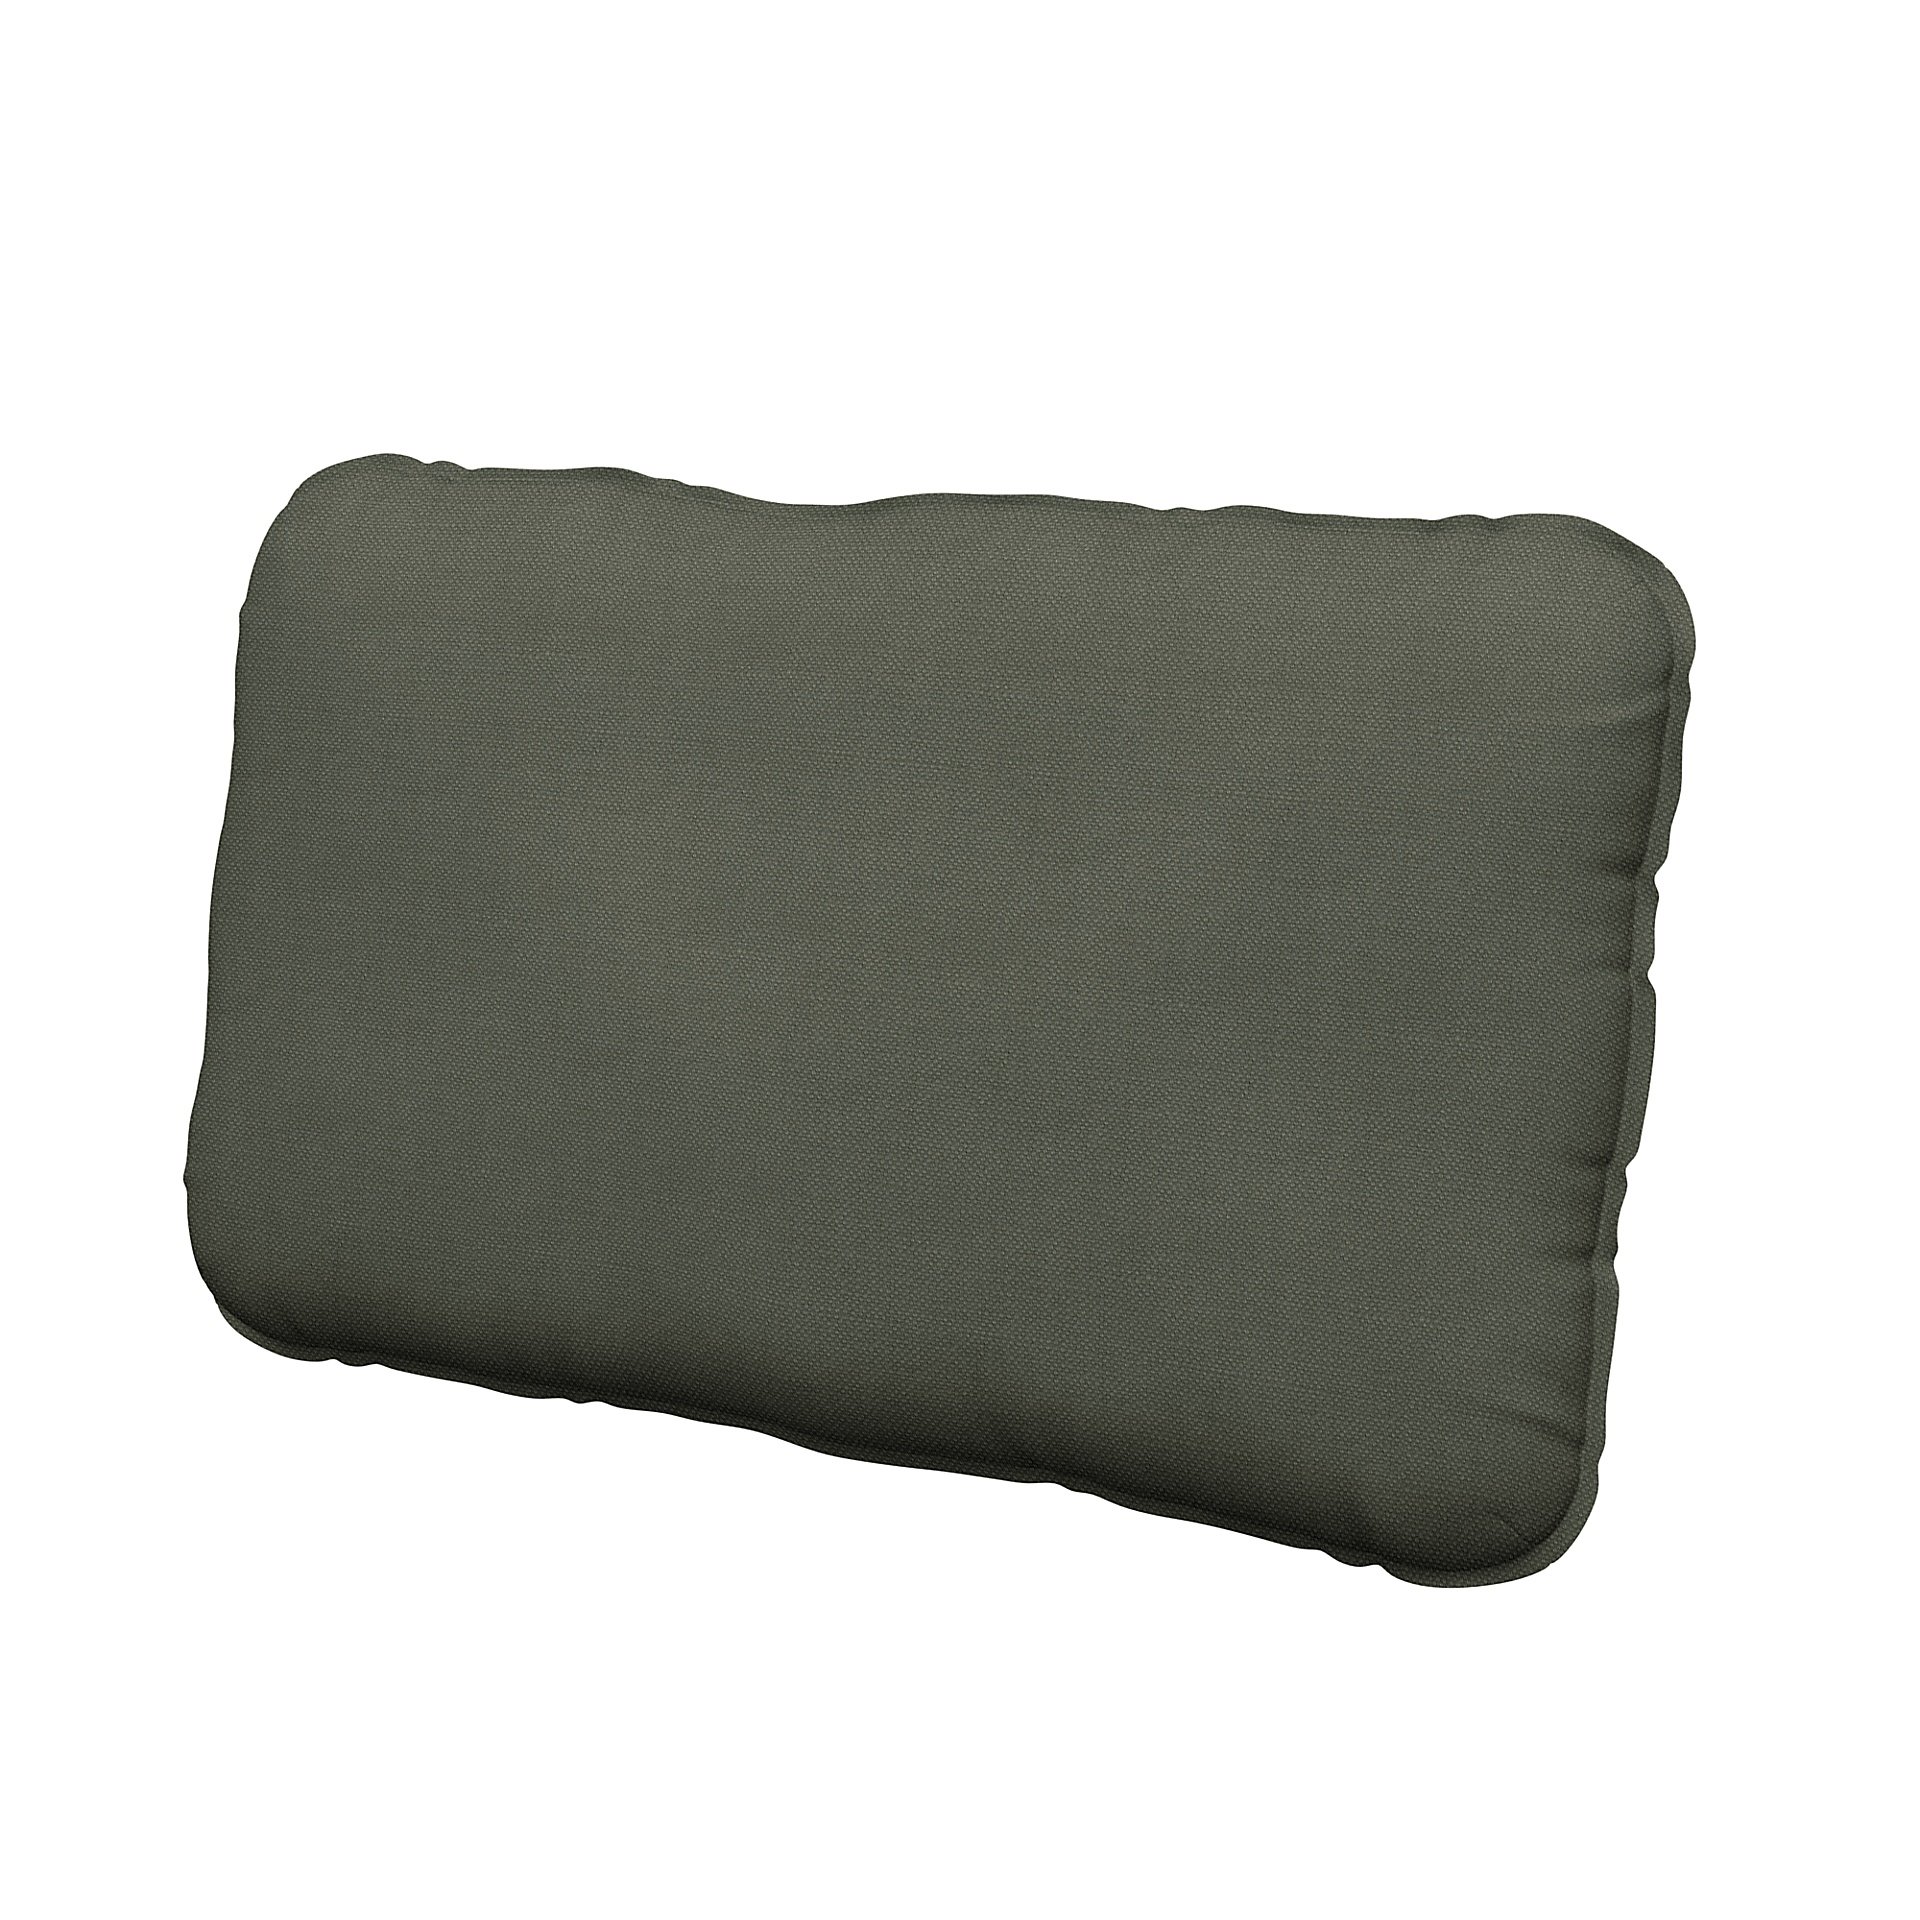 IKEA - Vallentuna back cushion cover 40x75cm, Rosemary, Linen - Bemz